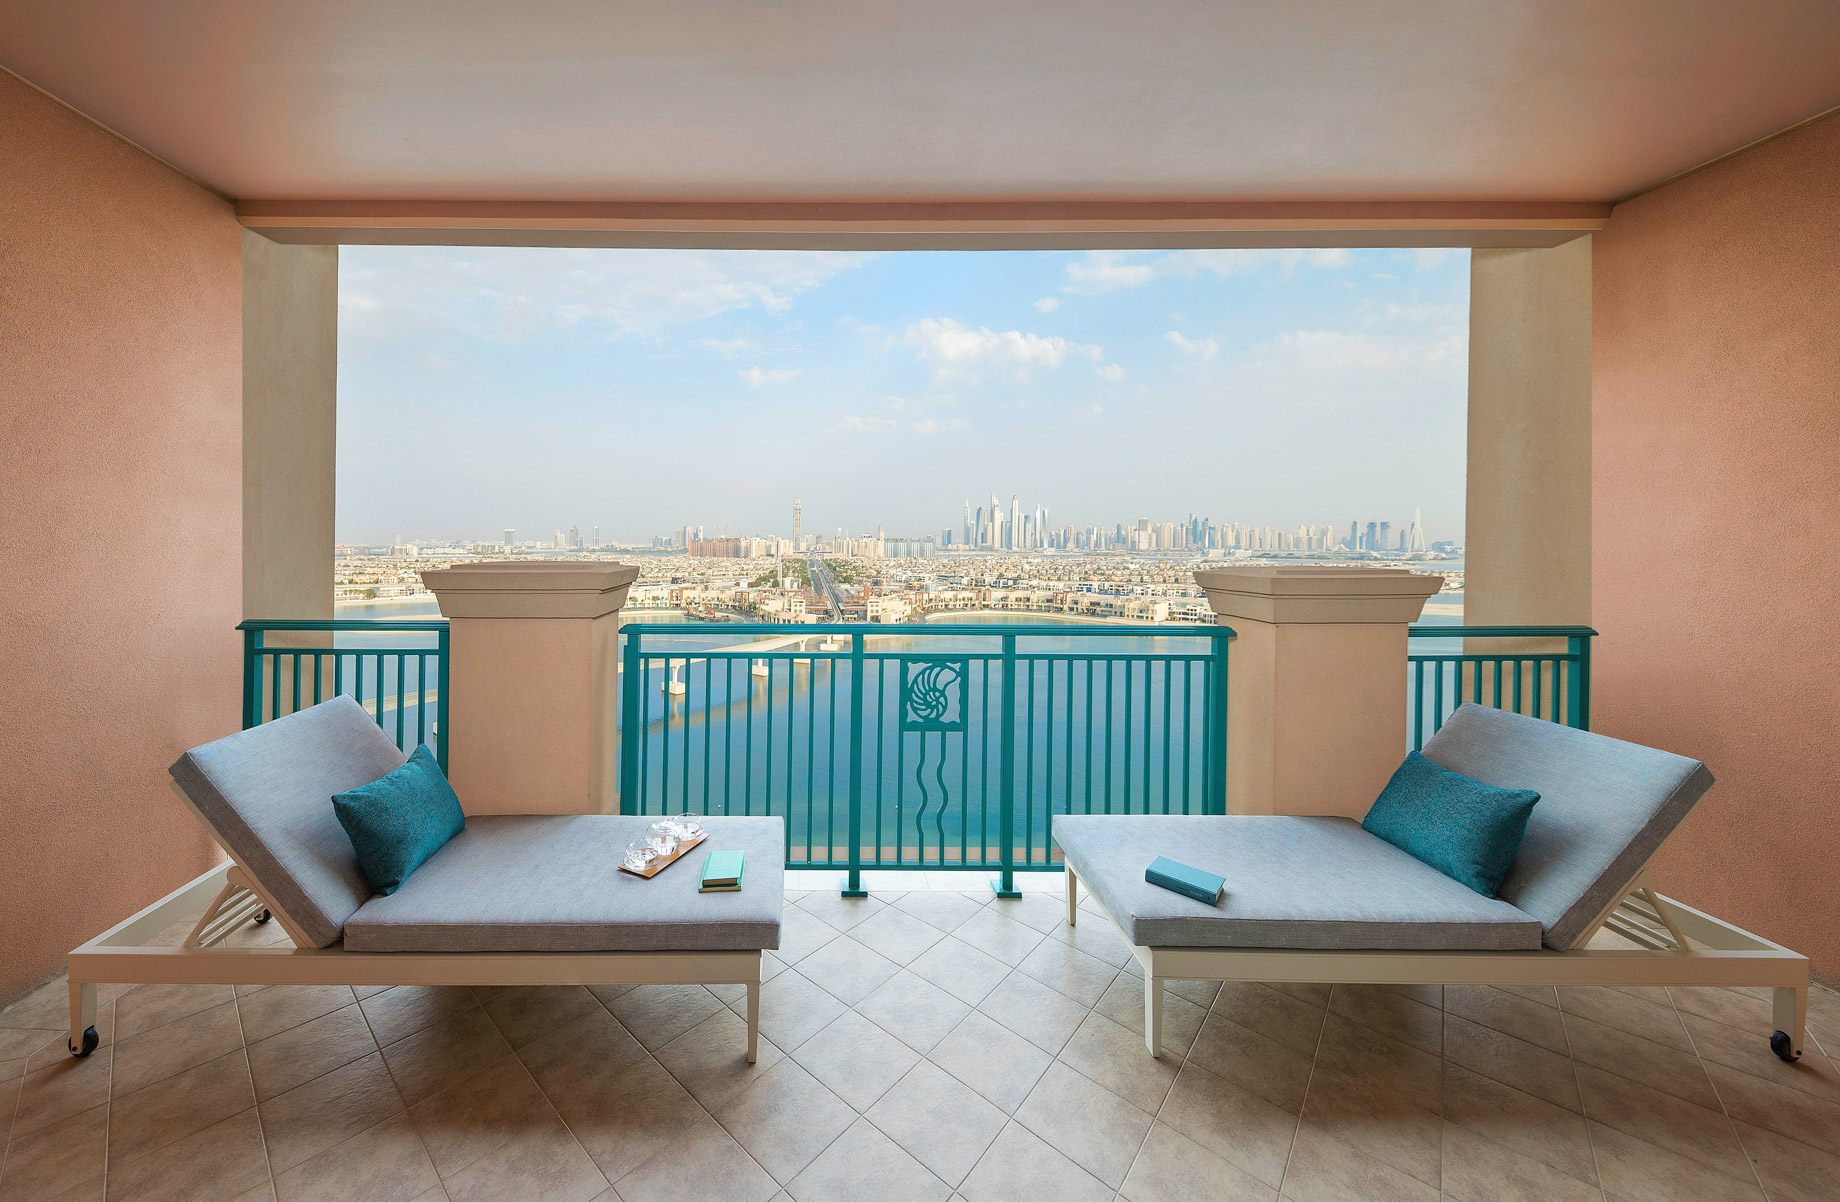 Atlantis The Palm Resort – Crescent Rd, Dubai, UAE – Regal Club Suite Balcony